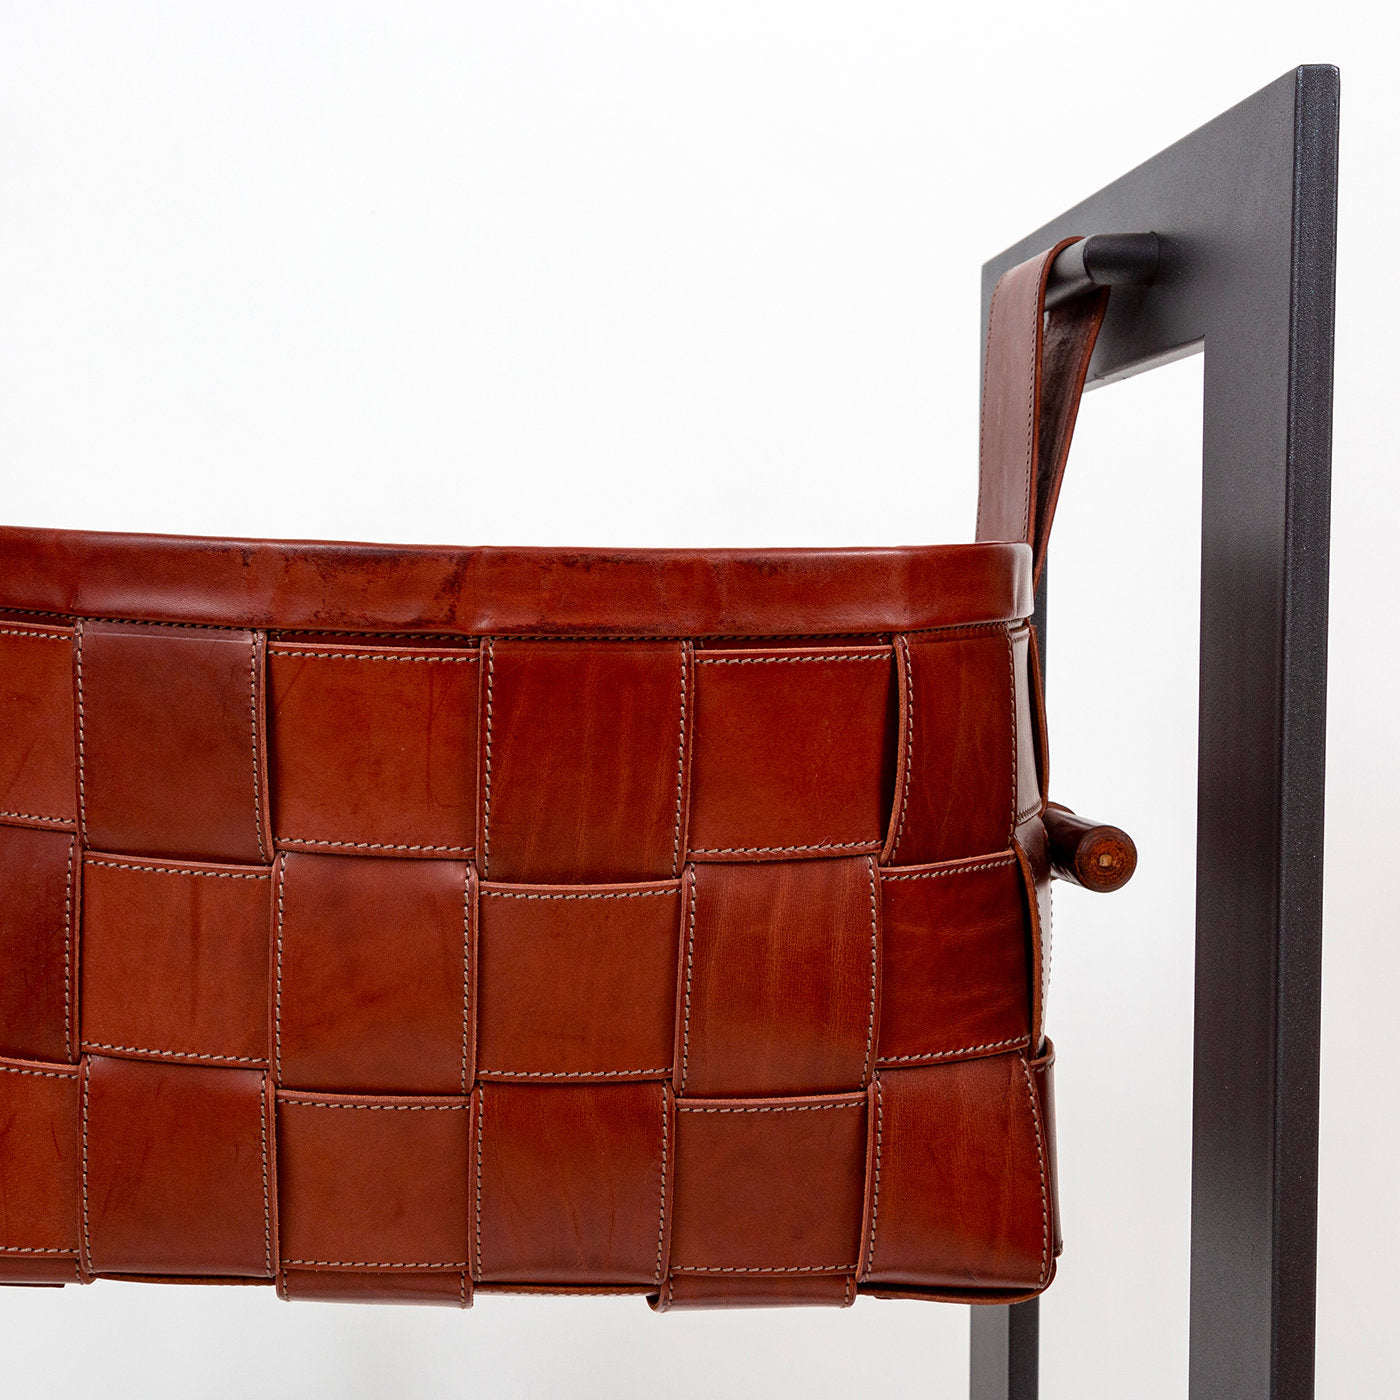 Leather Basket with Stand Dark Brown - Alternative view 1